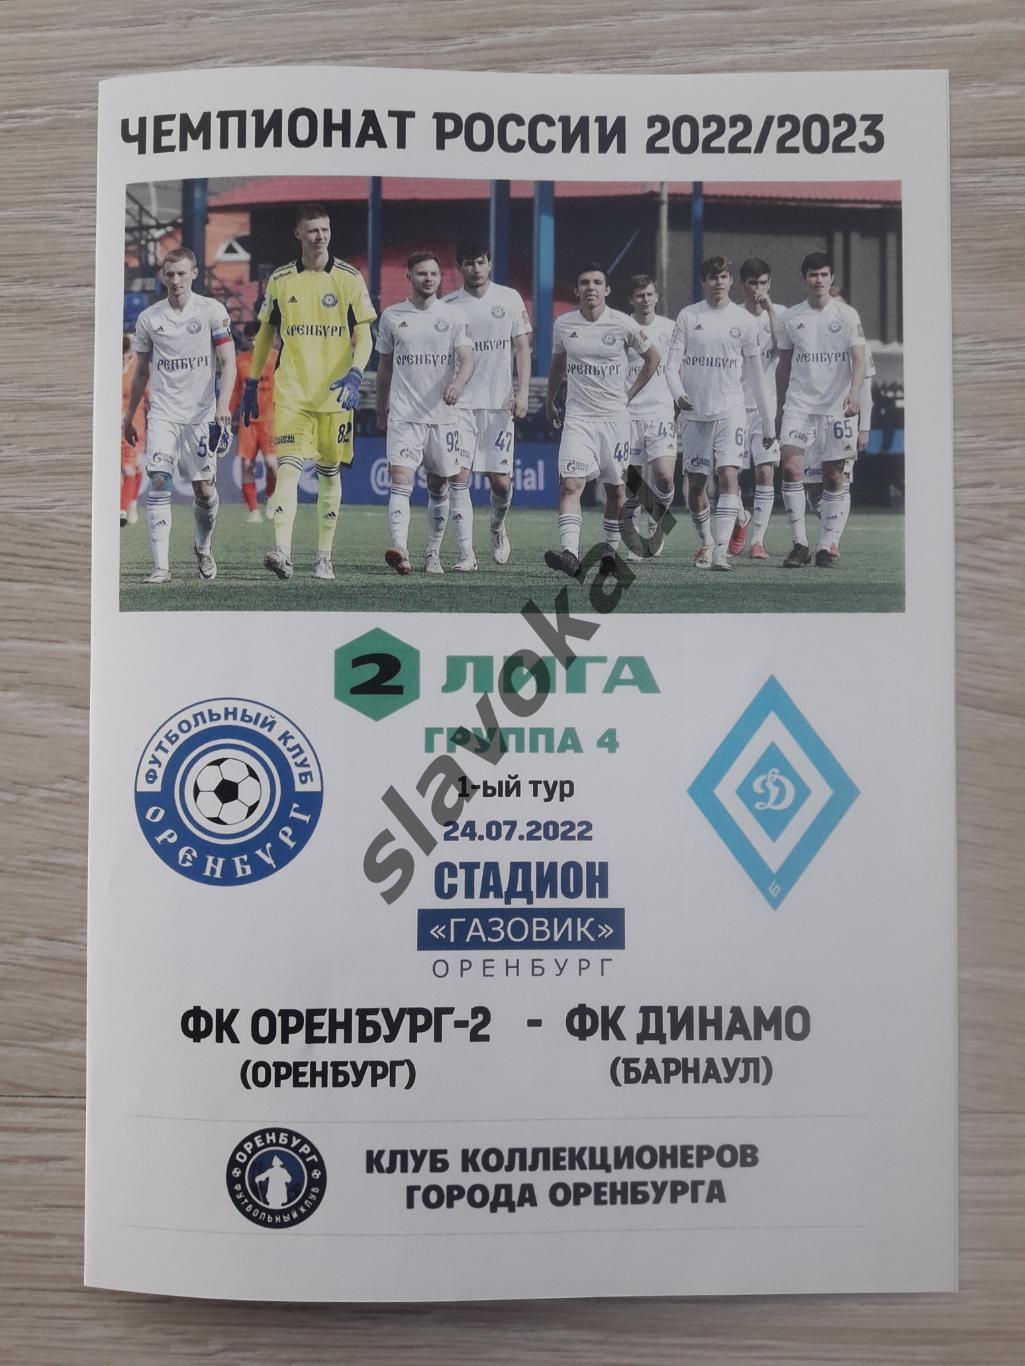 Оренбург 2 - Динамо Барнаул 24.07.2022 - авторская программка